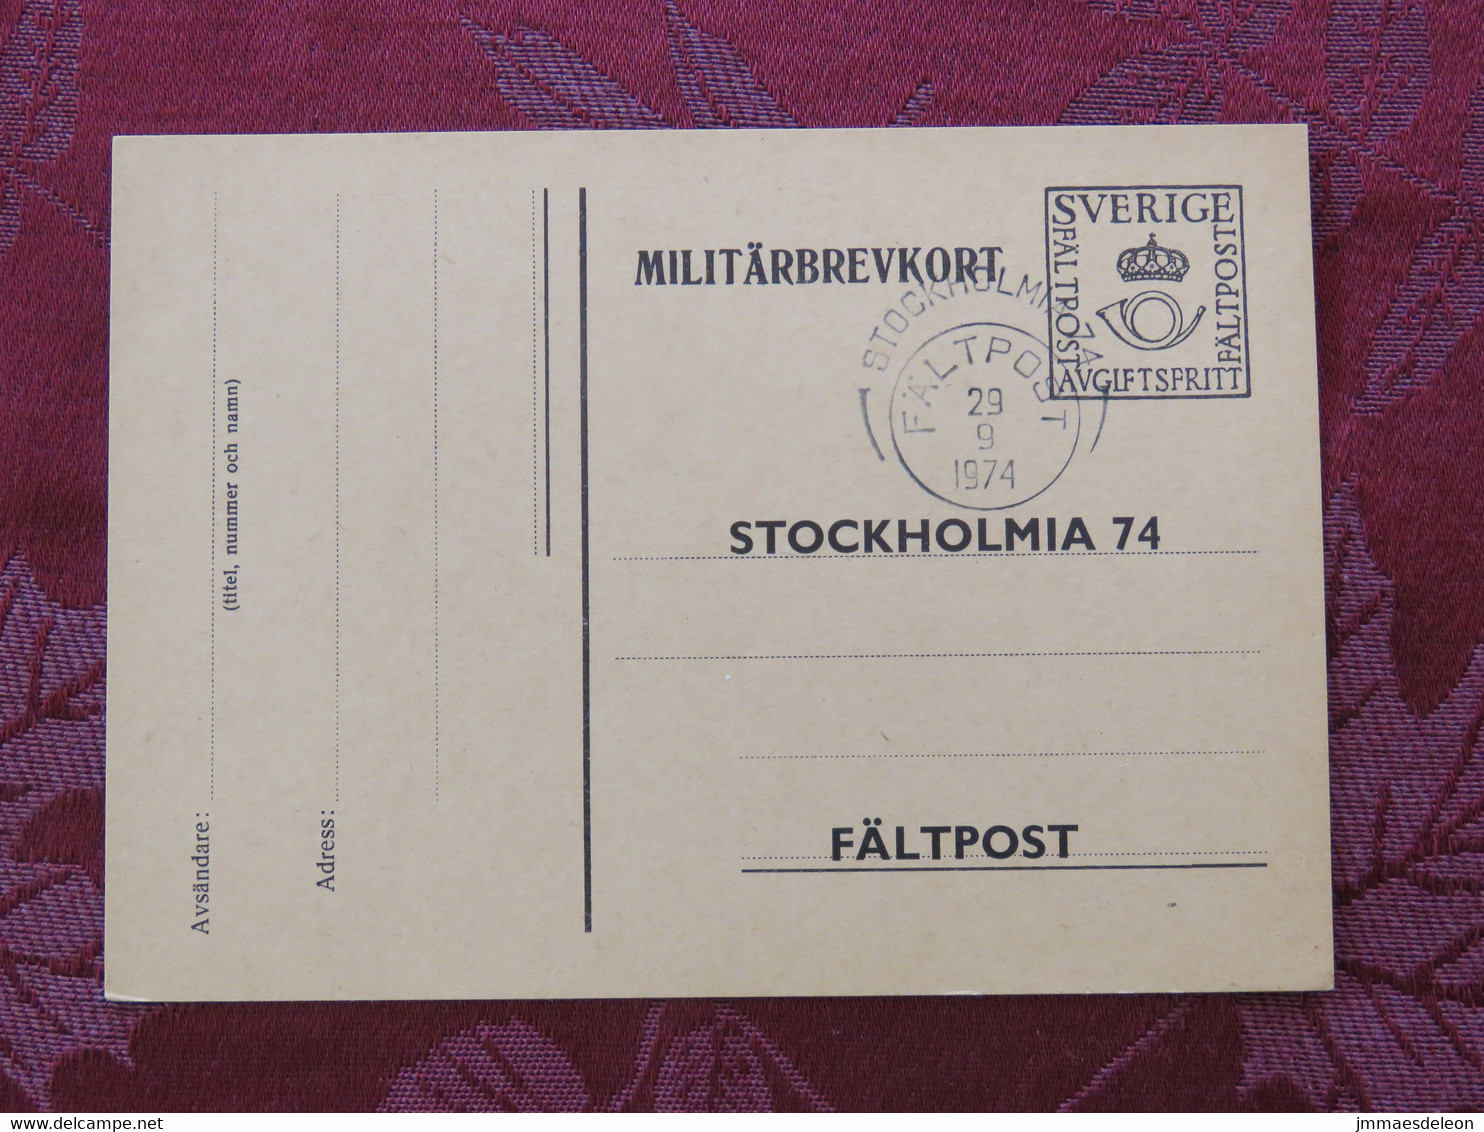 Sweden 1974 Military Army Stationery Postcard Unused With Cancel - Militärmarken